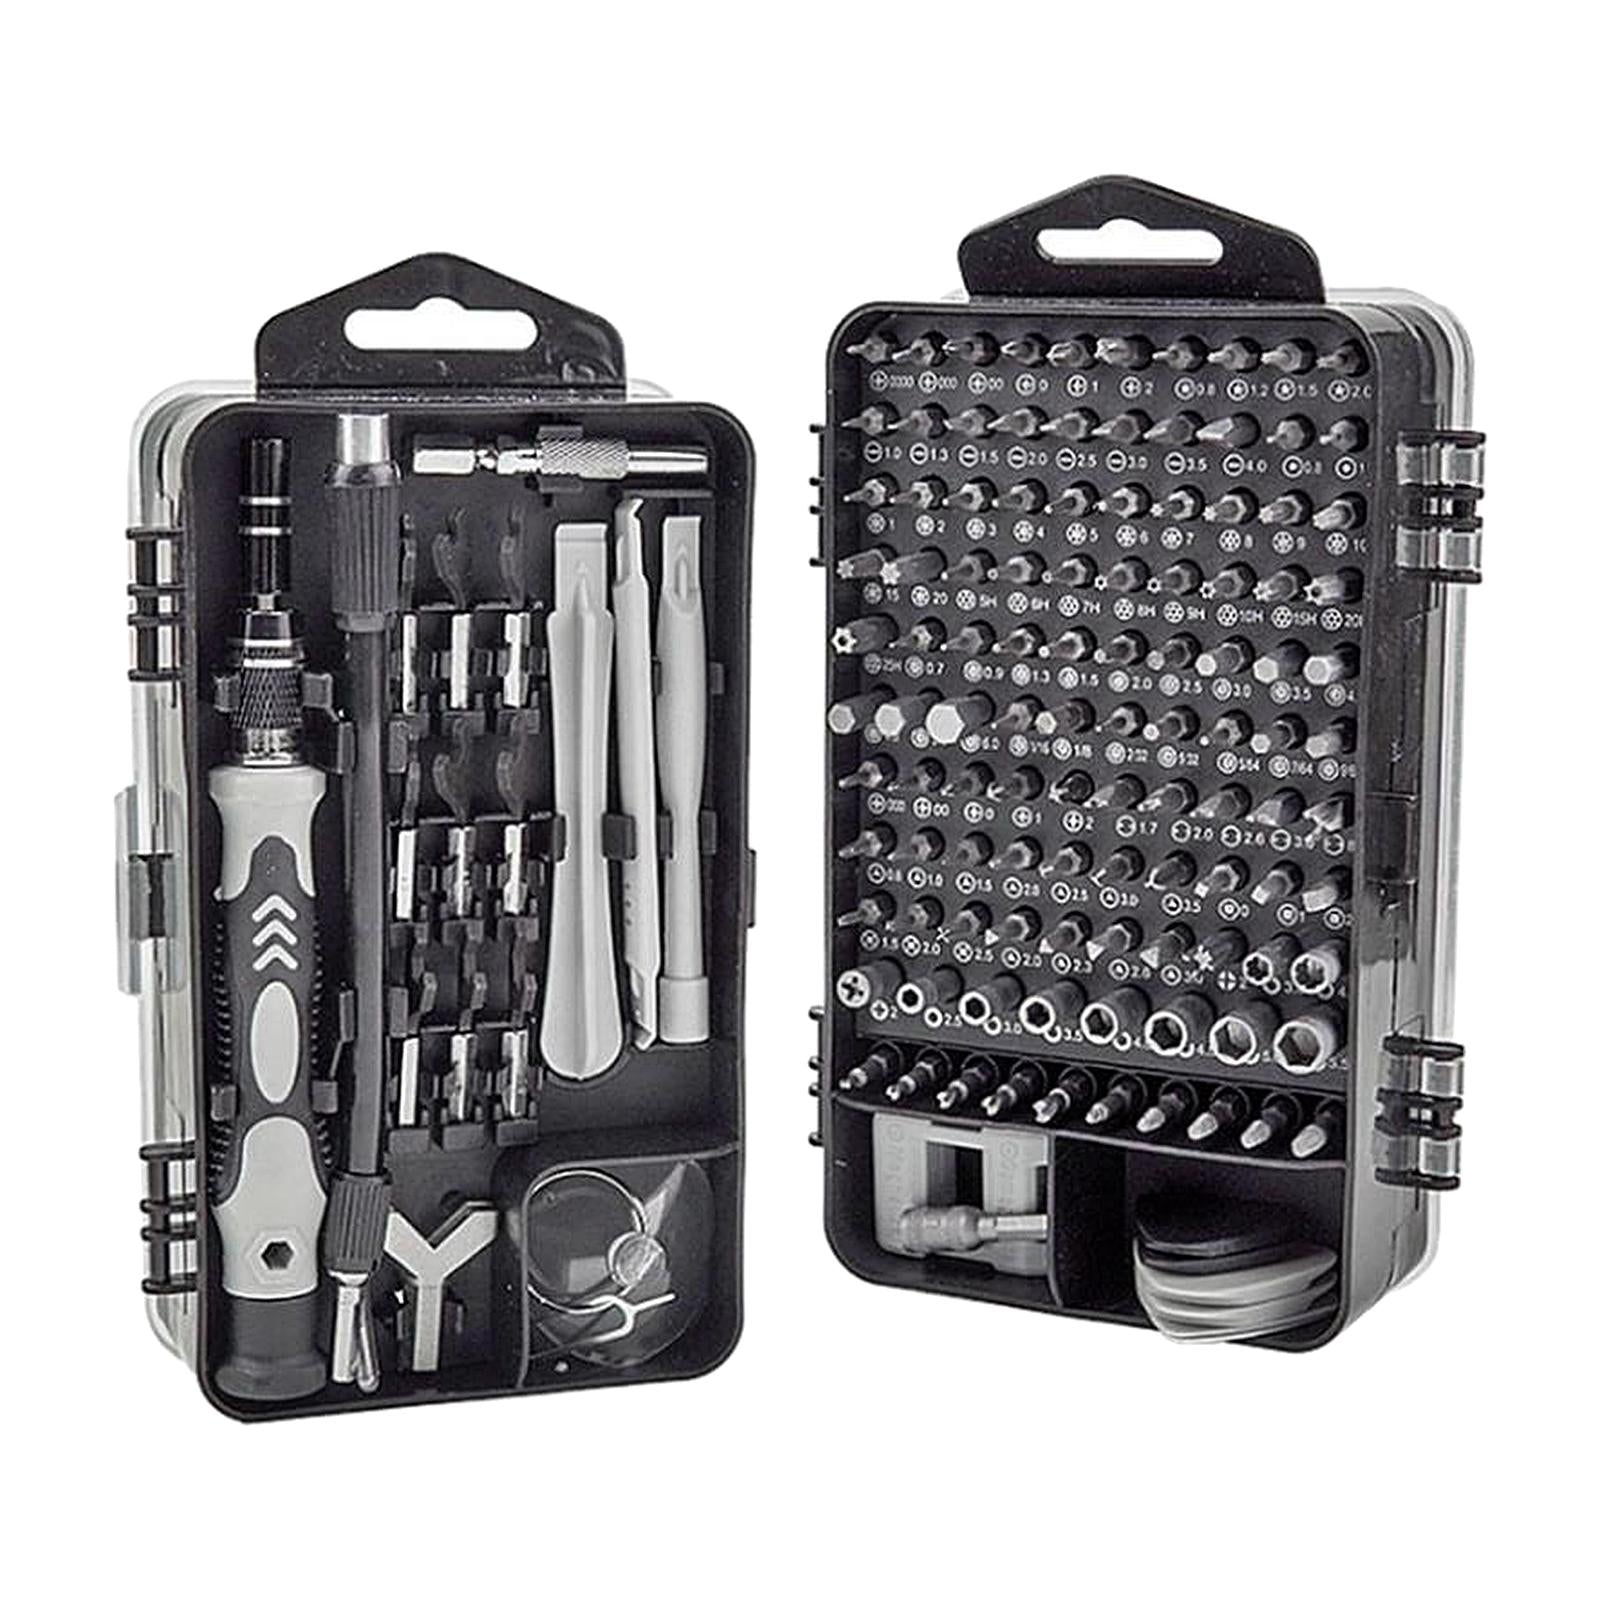 138 in 1 Screwdriver Kit Repair Tool Kits with Case for Cellphone DIY Laptop Black